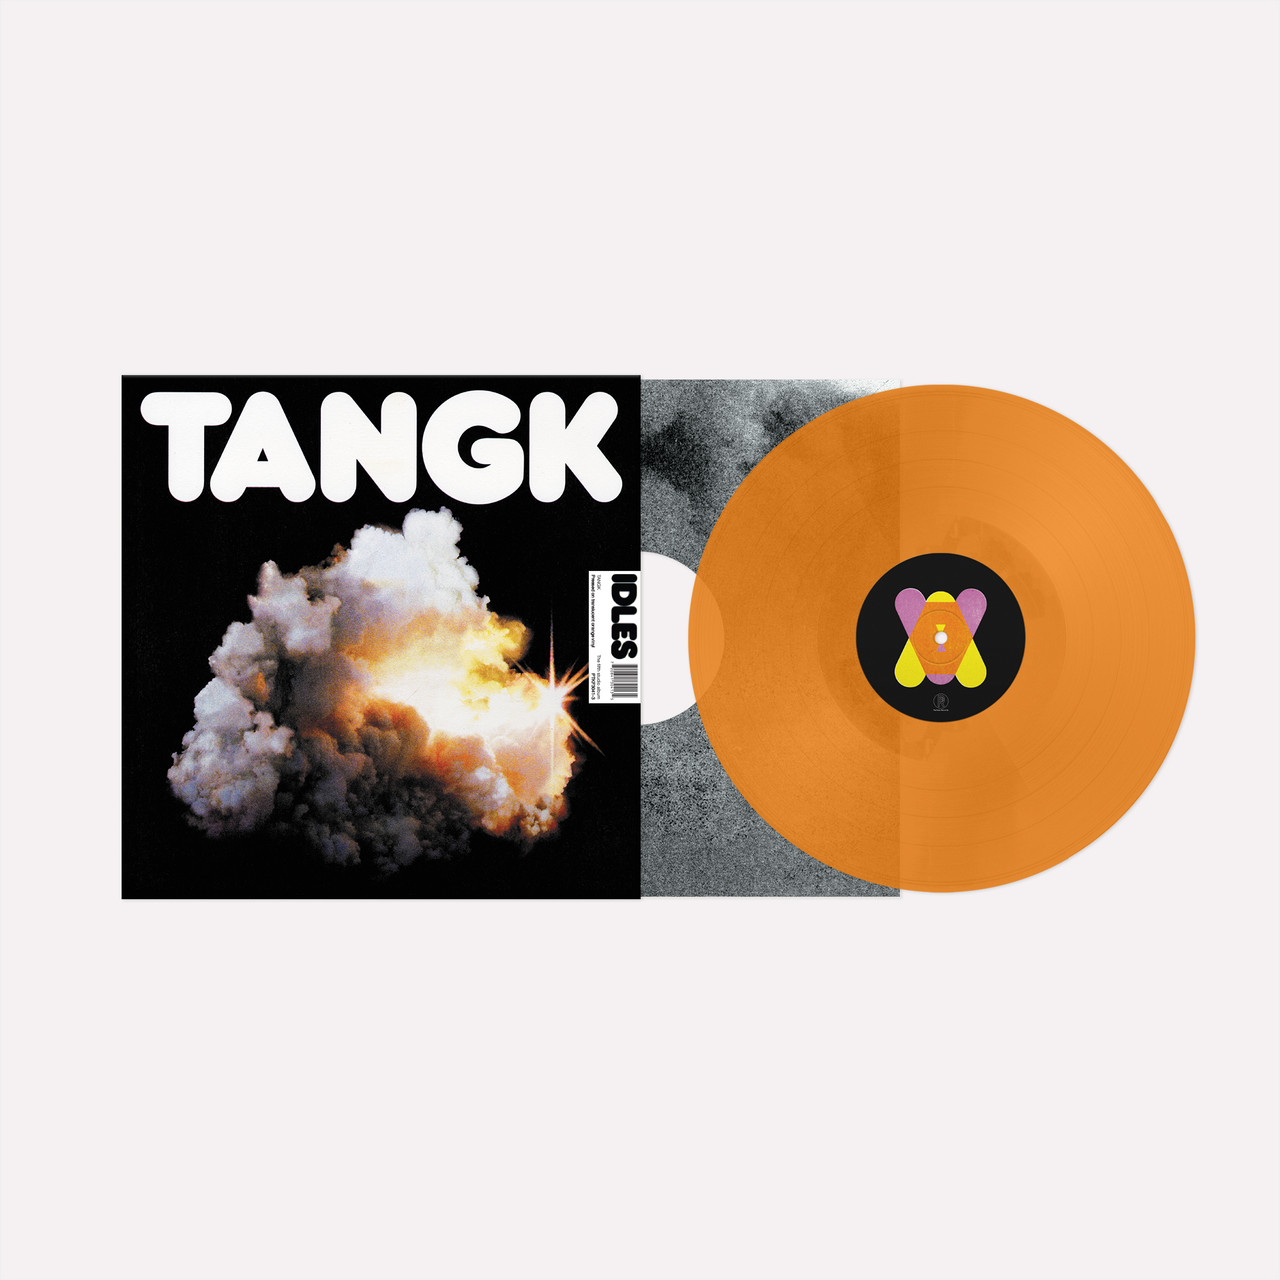 Limited Edition Orange vinyl